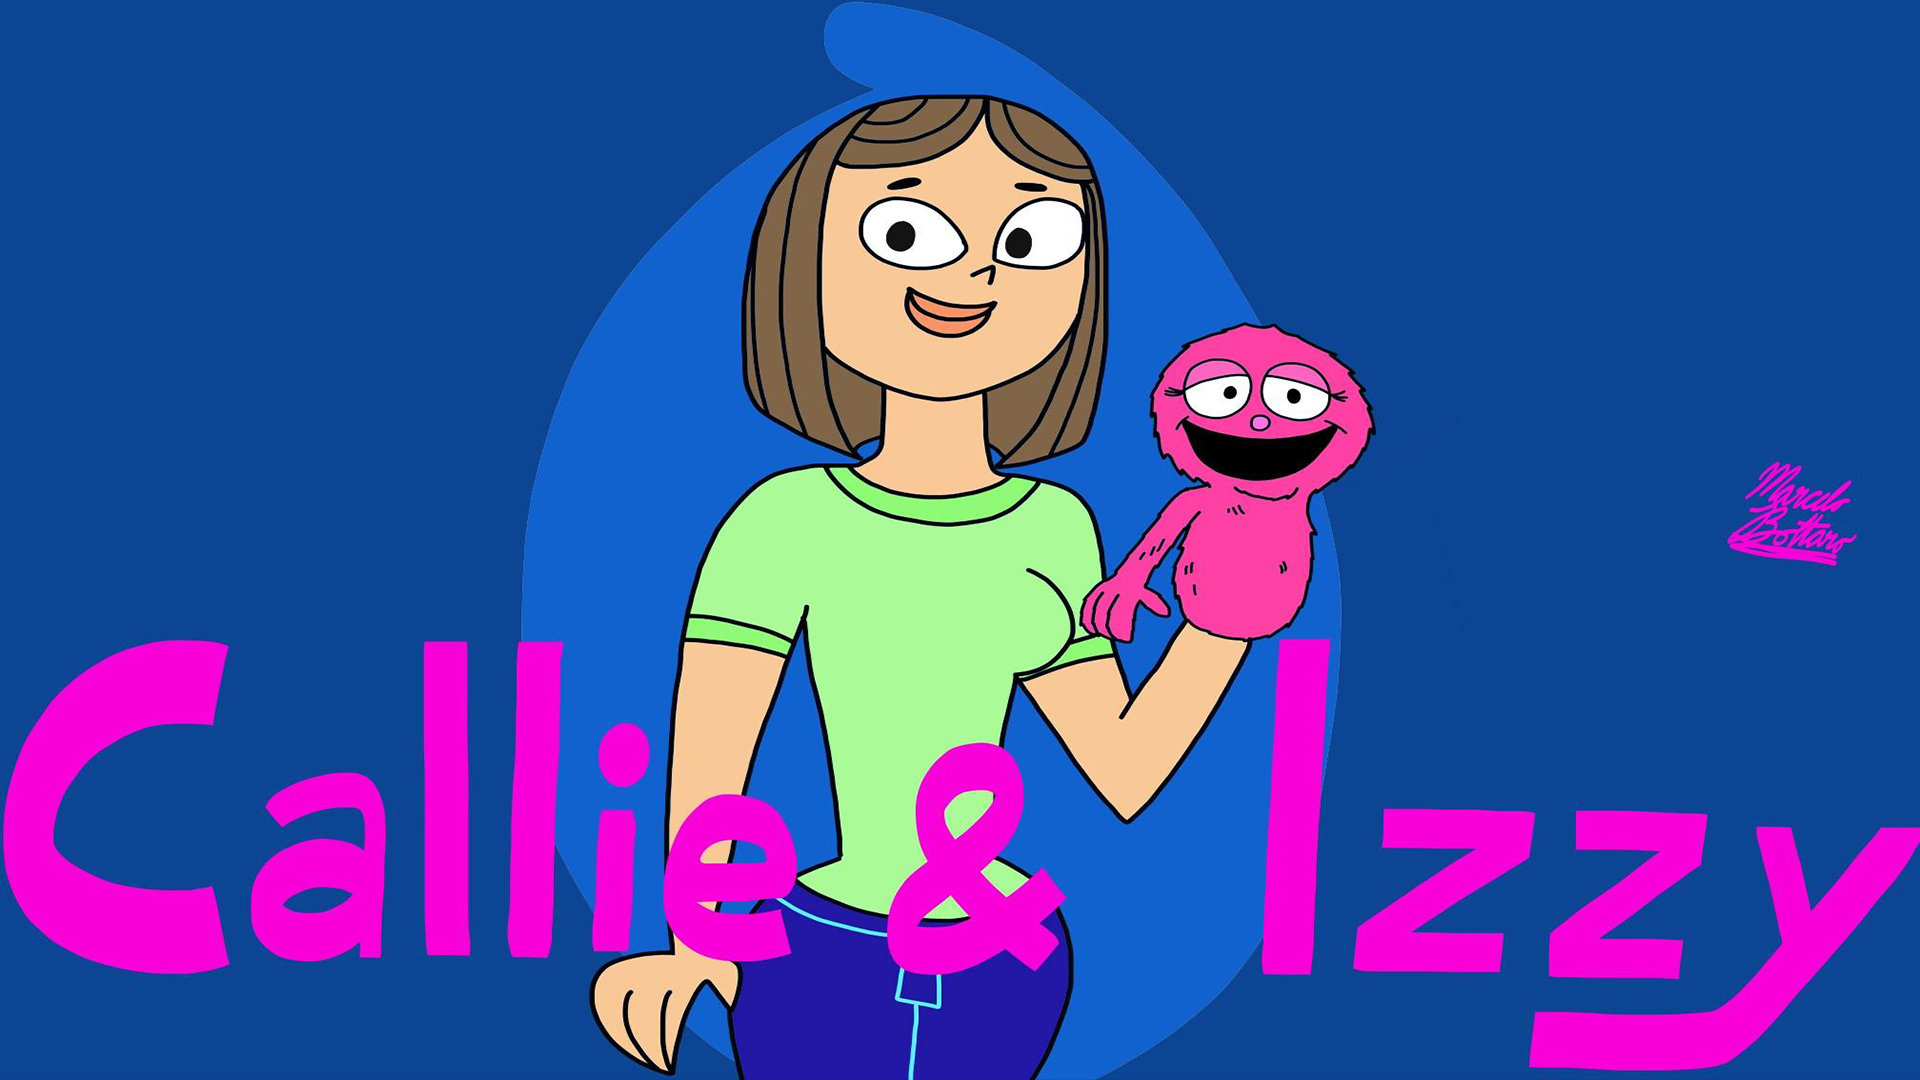 Callie and Izzy